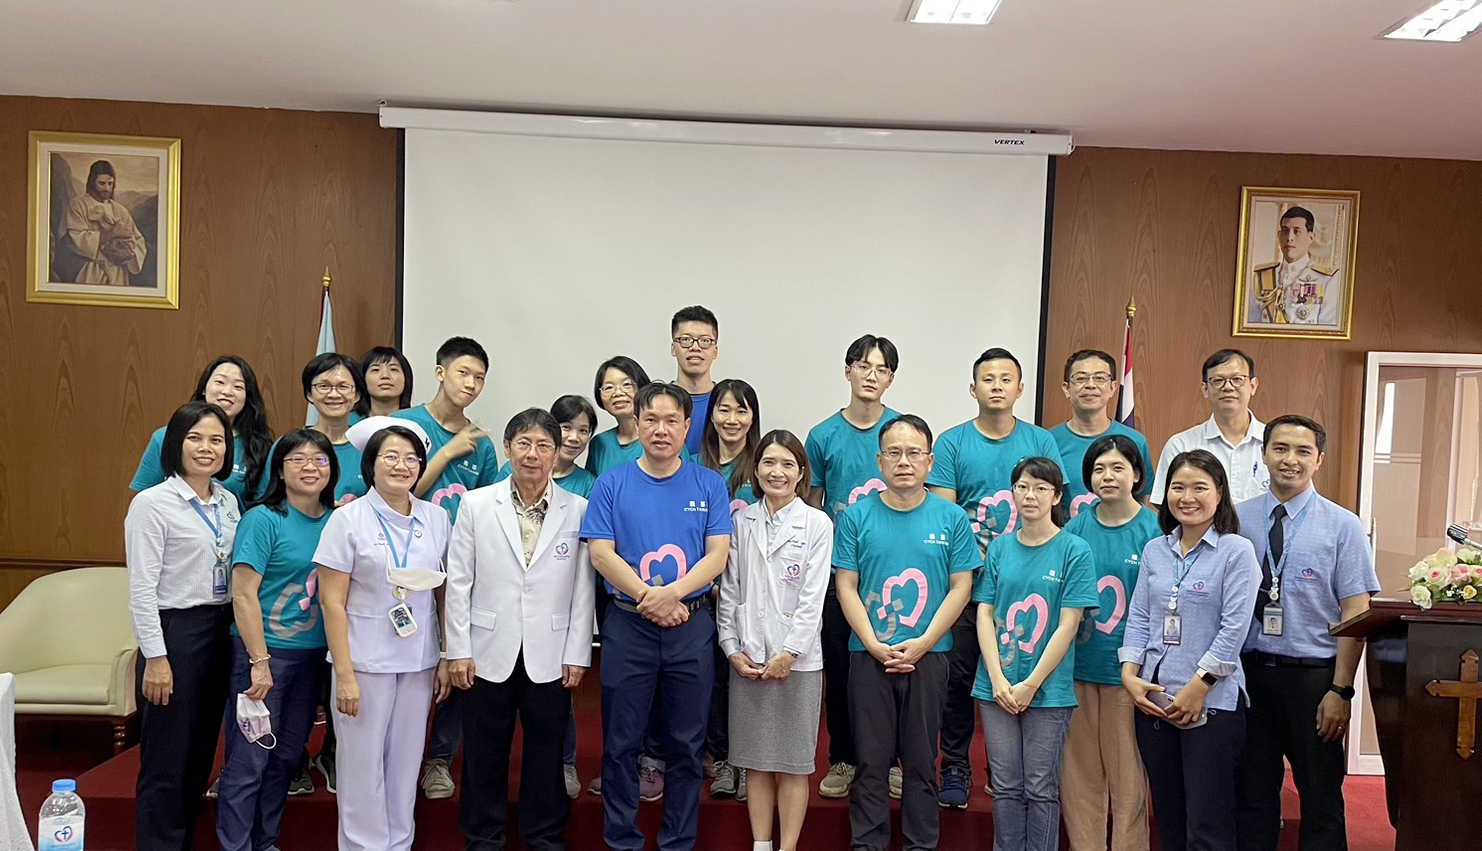 CHIA-YI Christian Hospital ร่วมกับโรงพยาบาลแมคคอร์มิค ให้บริการหน่วยแพทย์สาธารณสุขเคลื่อนที่